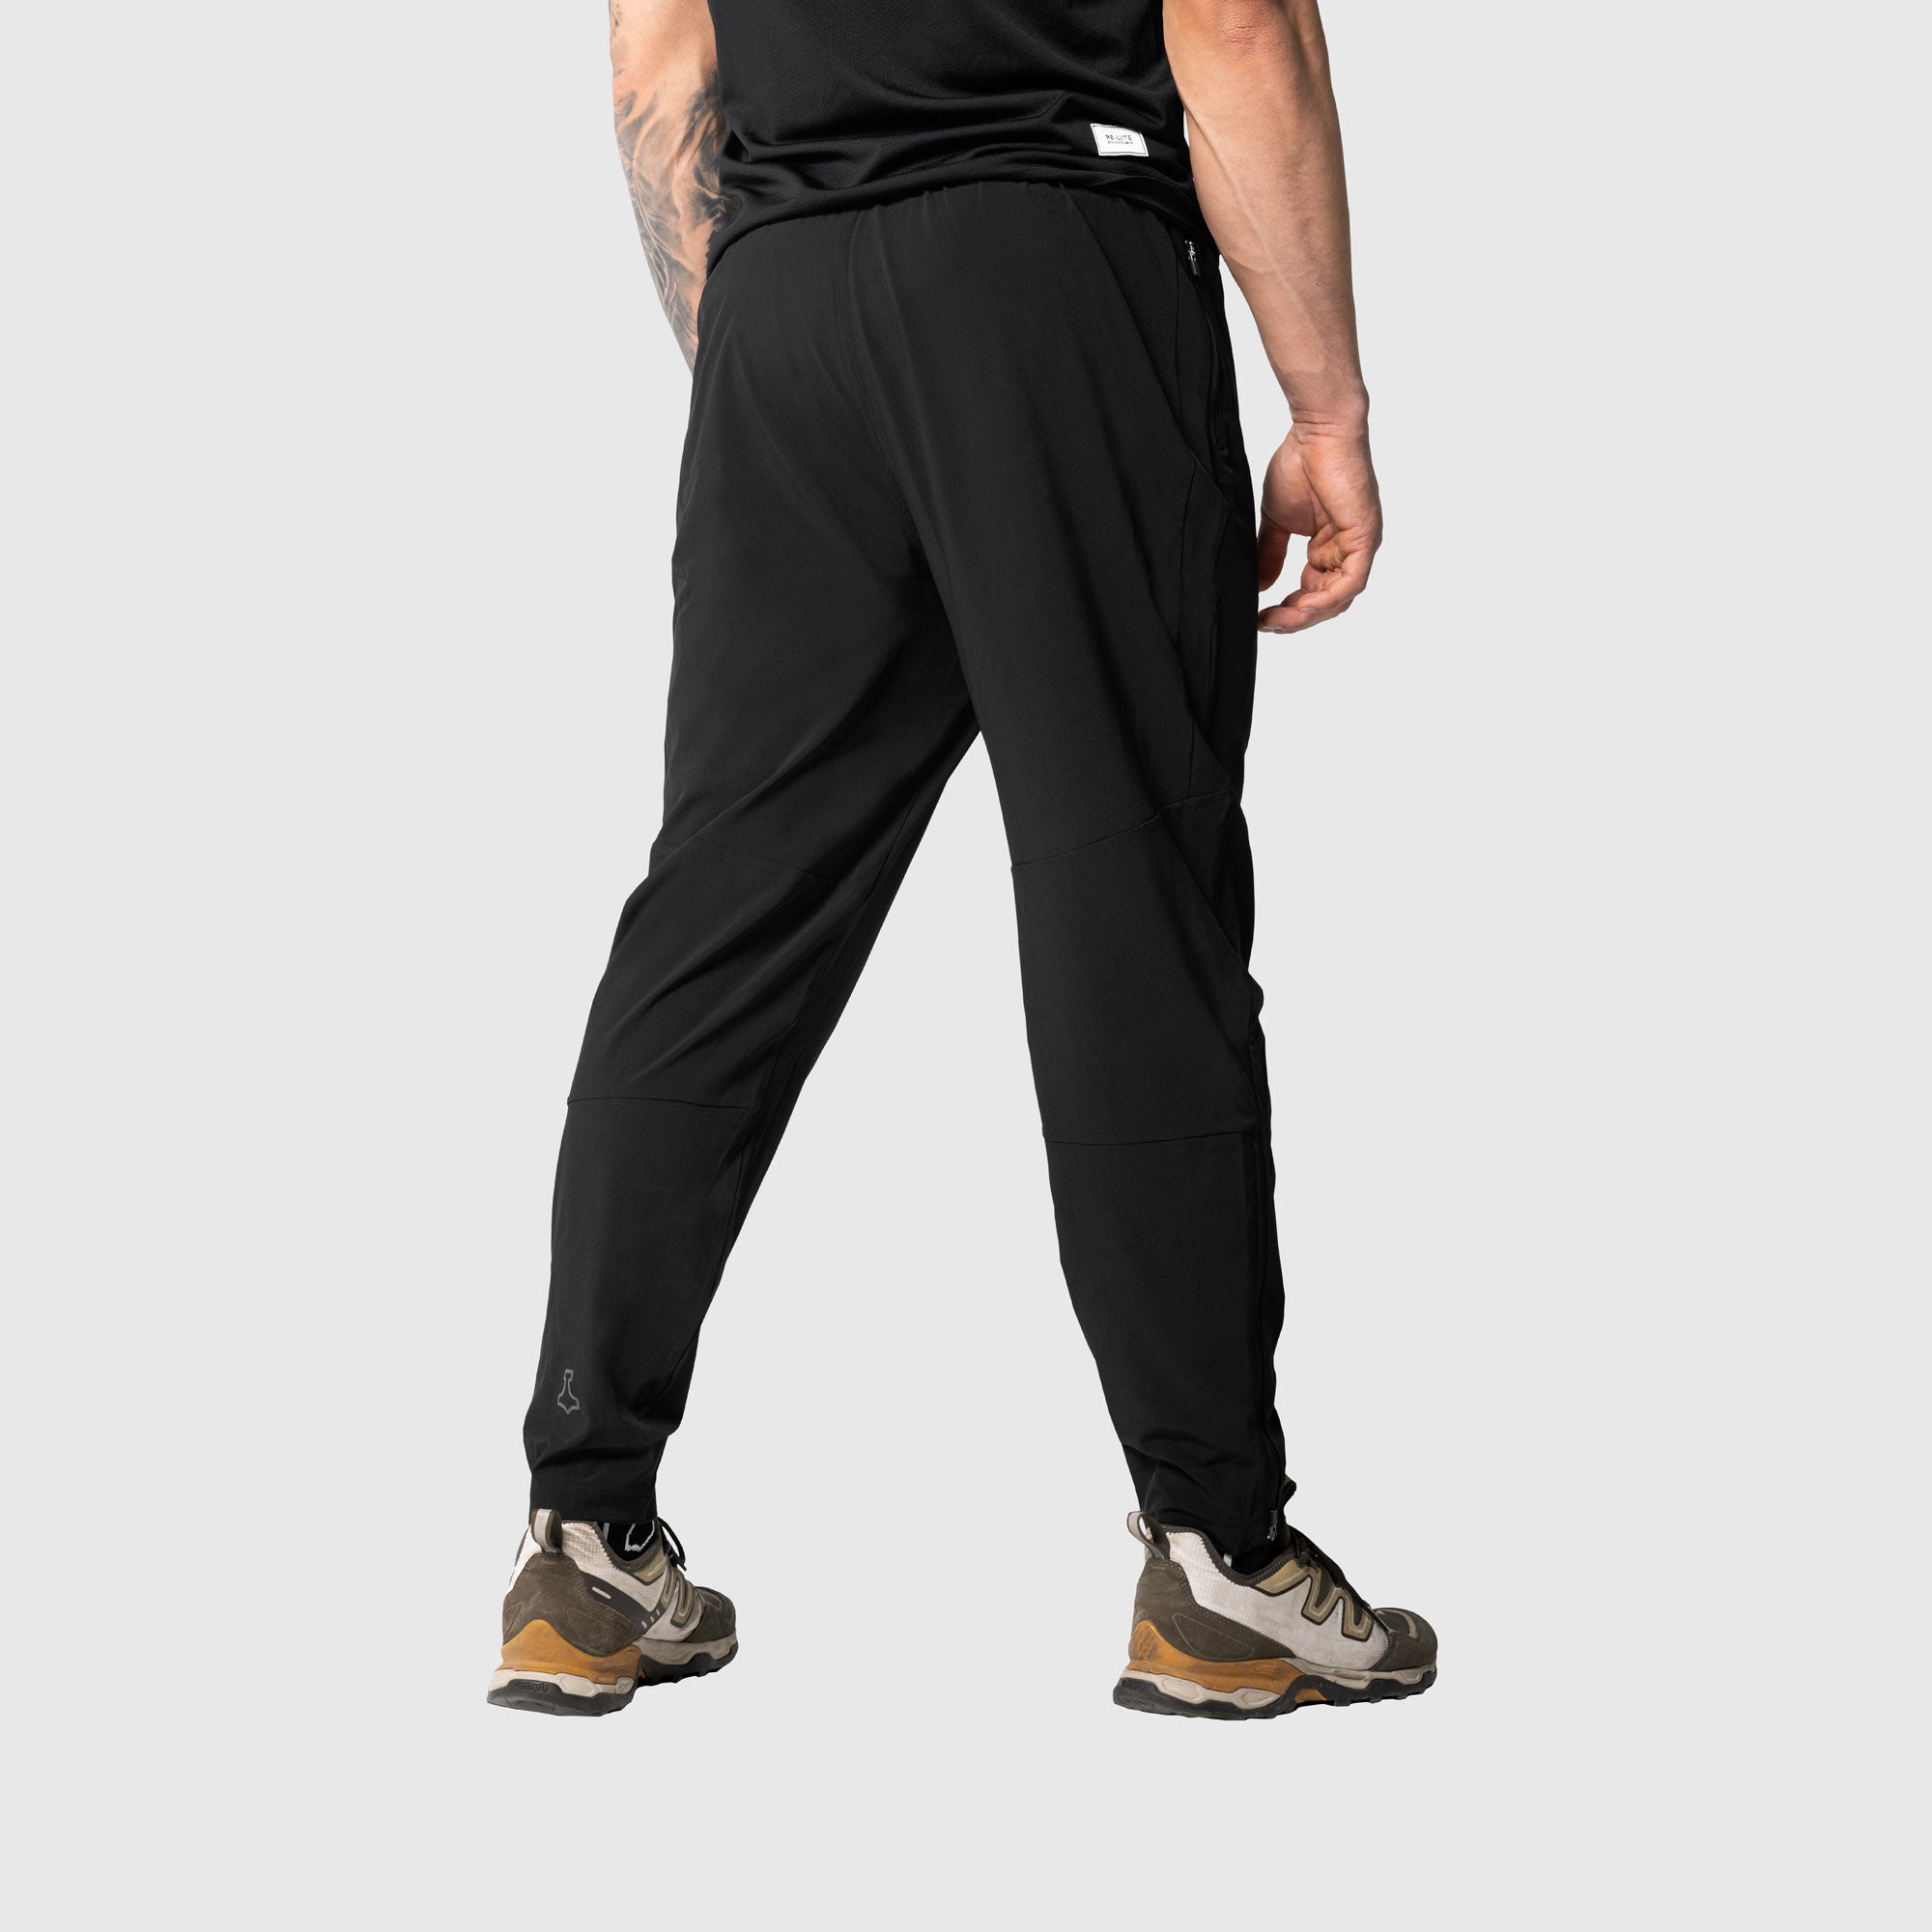 Liiteguard RE-LIITE LONG PANTS (MEN) Trousers BLACK